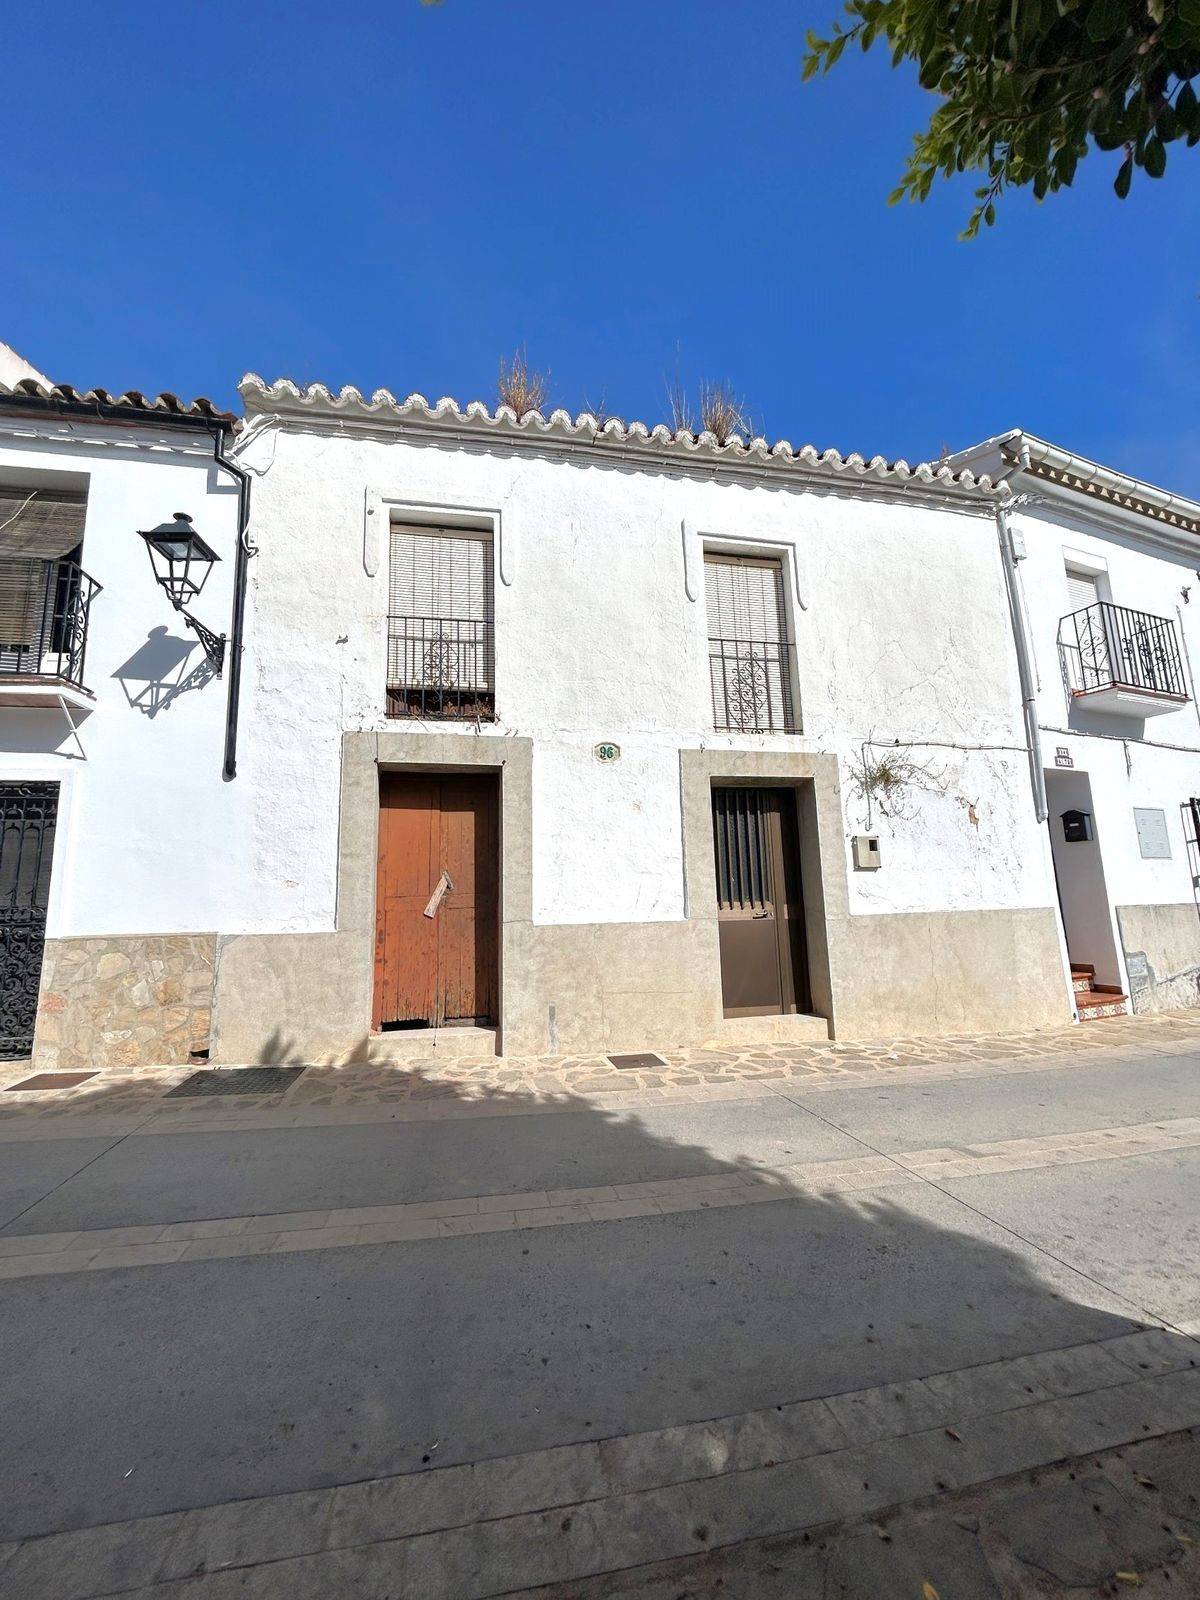 						Villa  Semi Detached
													for sale 
																			 in Gaucín
					